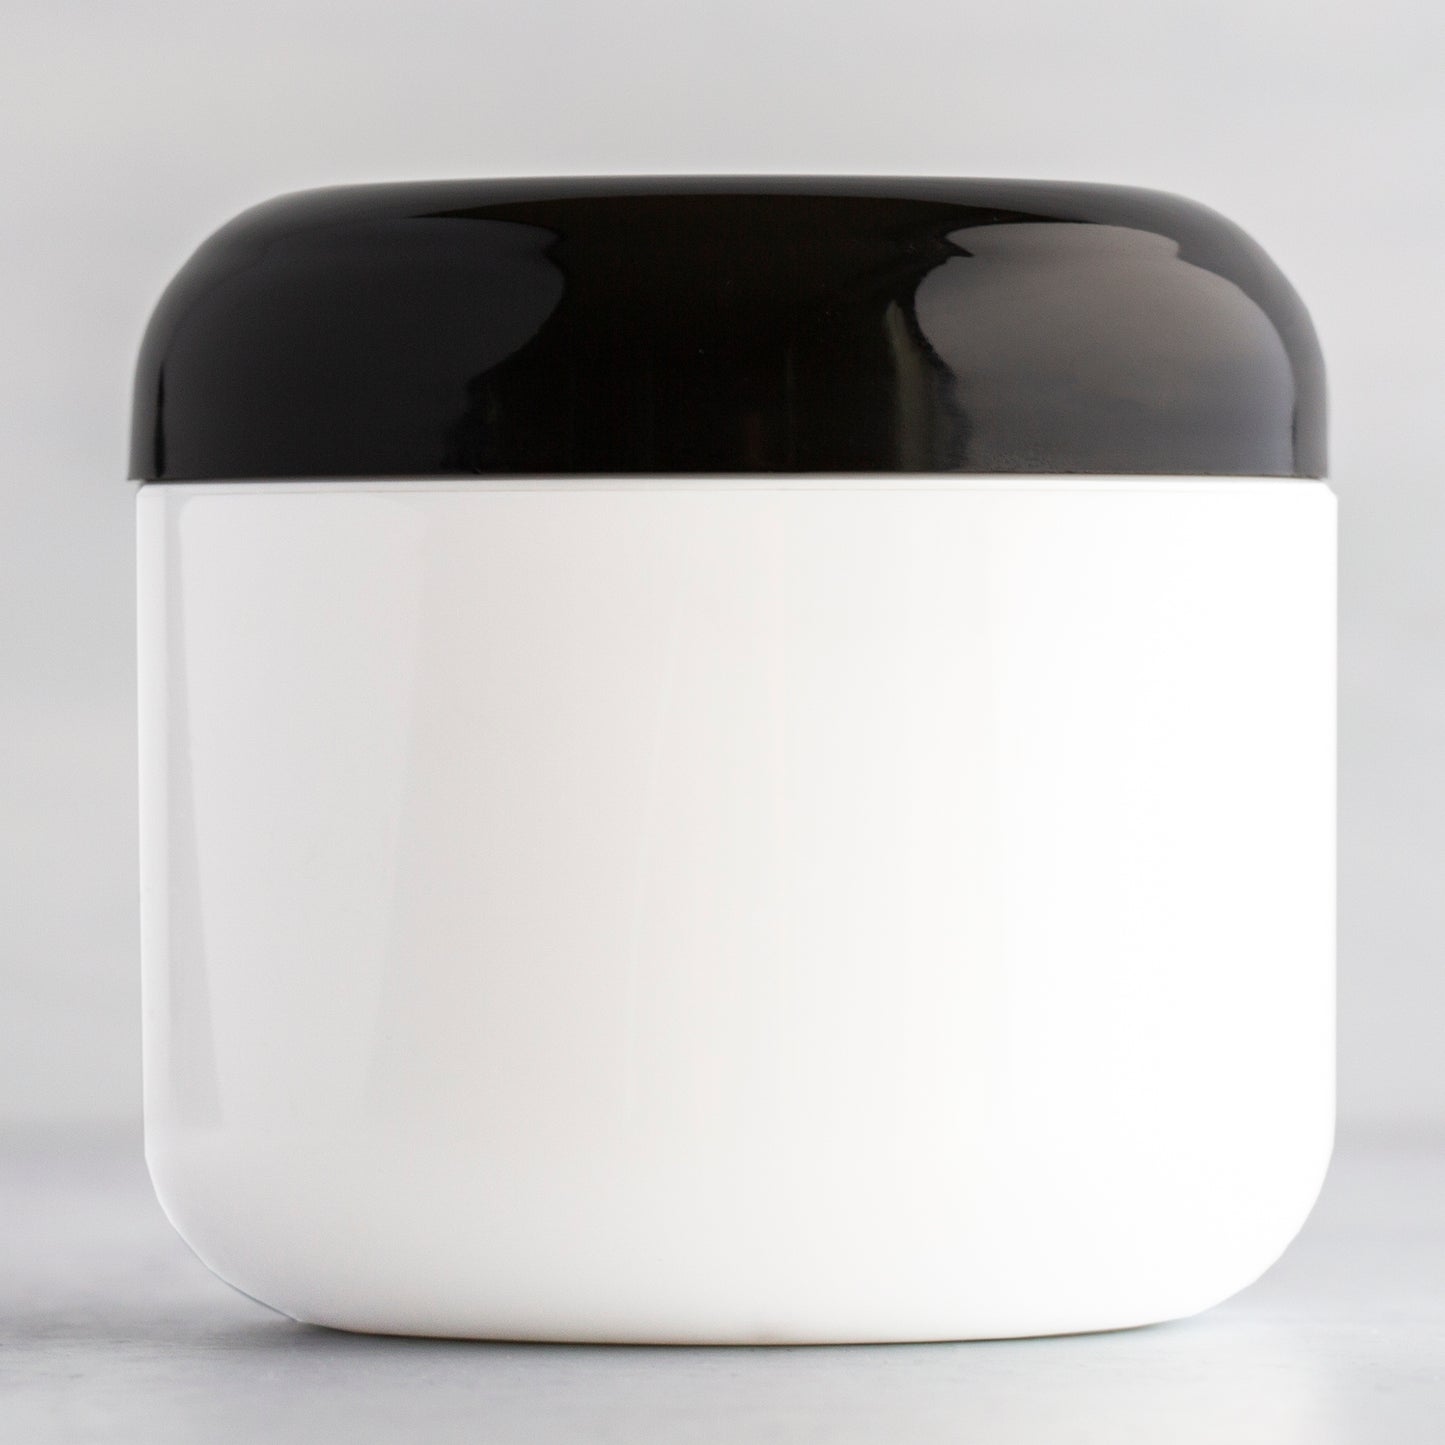 4 oz White Round Base Plastic Jar with Black Dome Cap